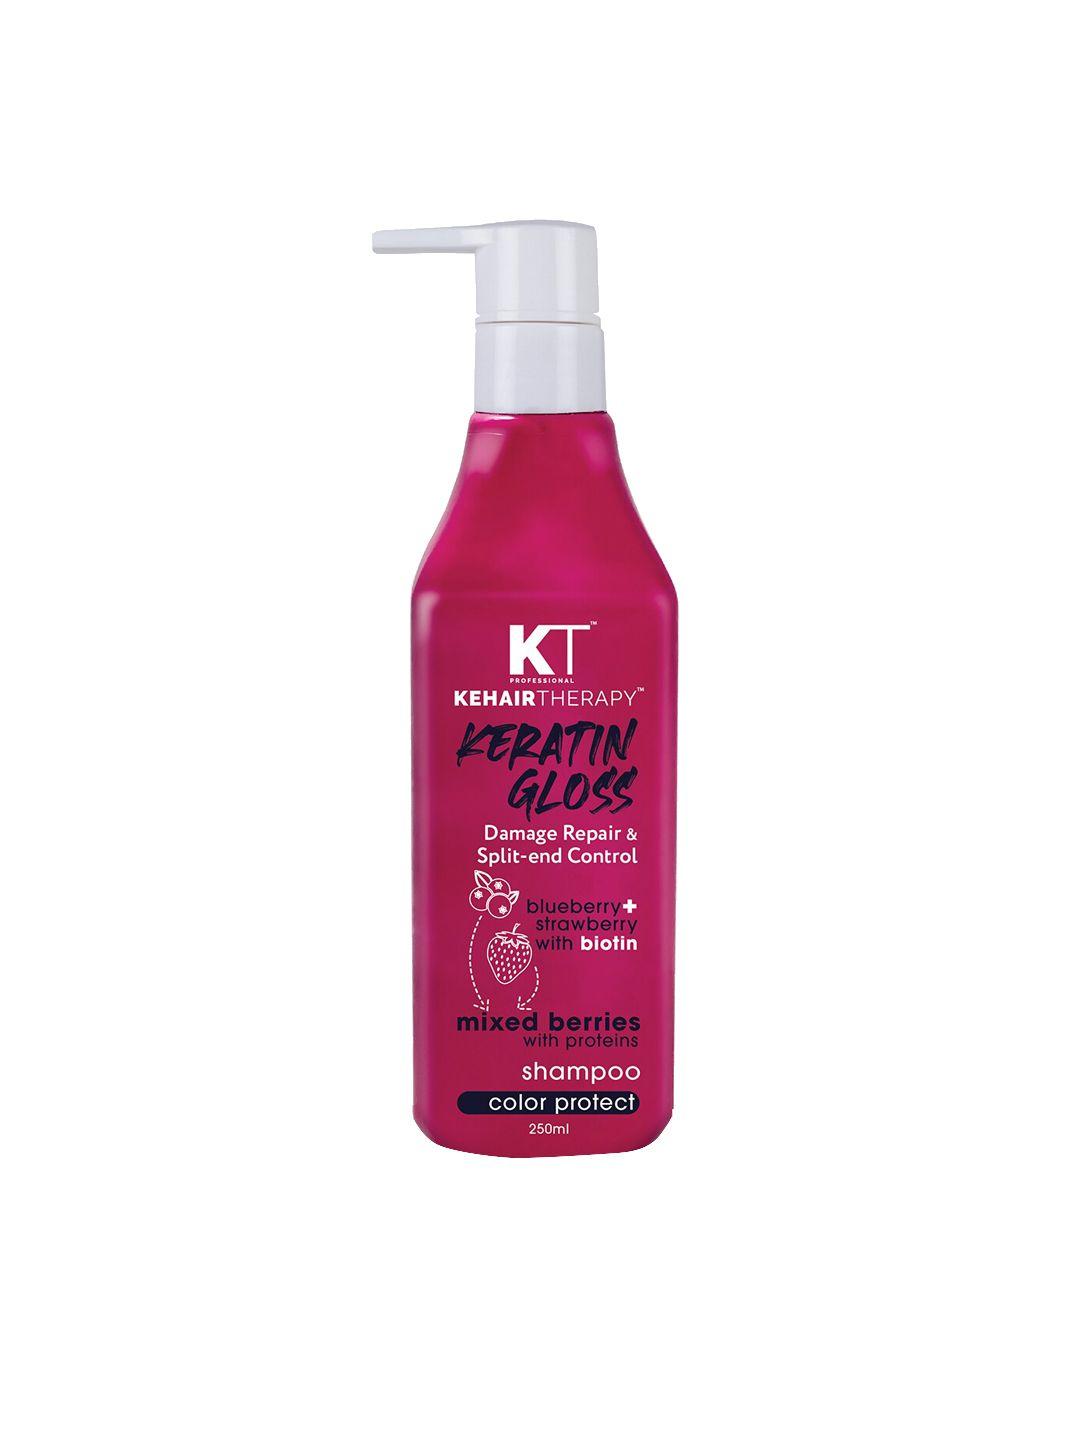 kehairtherapy professional keratin gloss damage repair & split end control shampoo 250ml